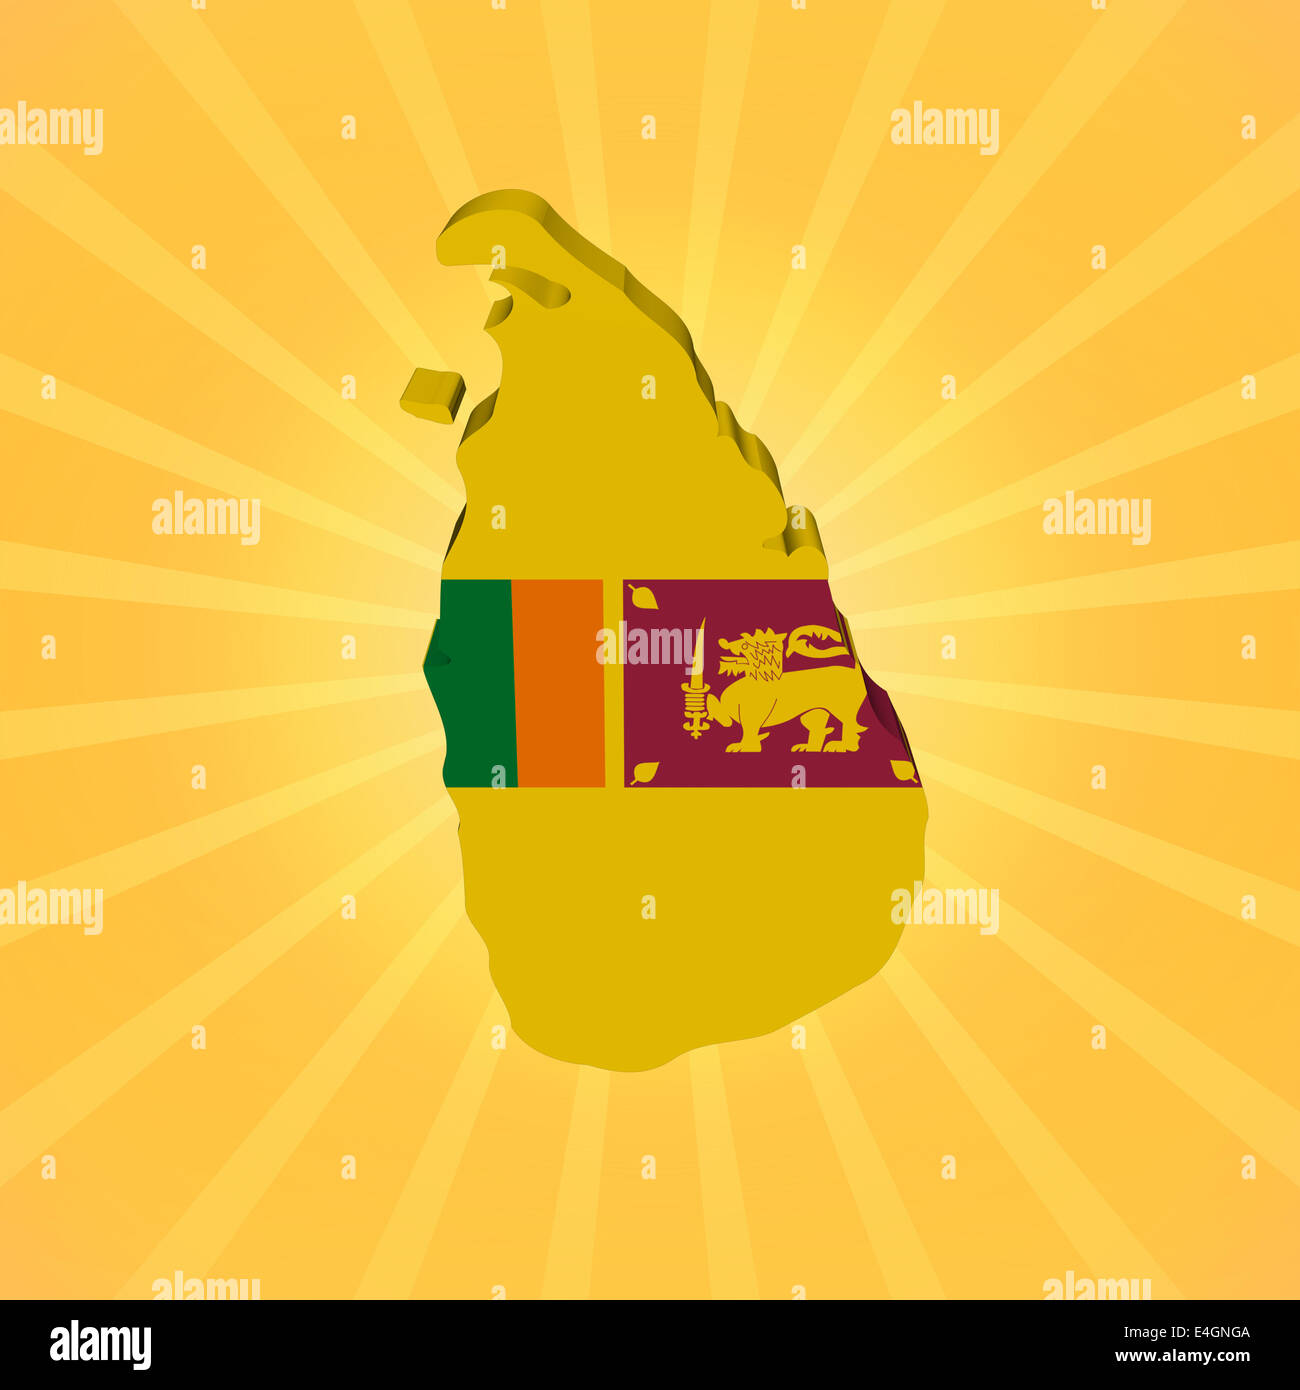 Sri Lanka map flag on sunburst illustration Stock Photo